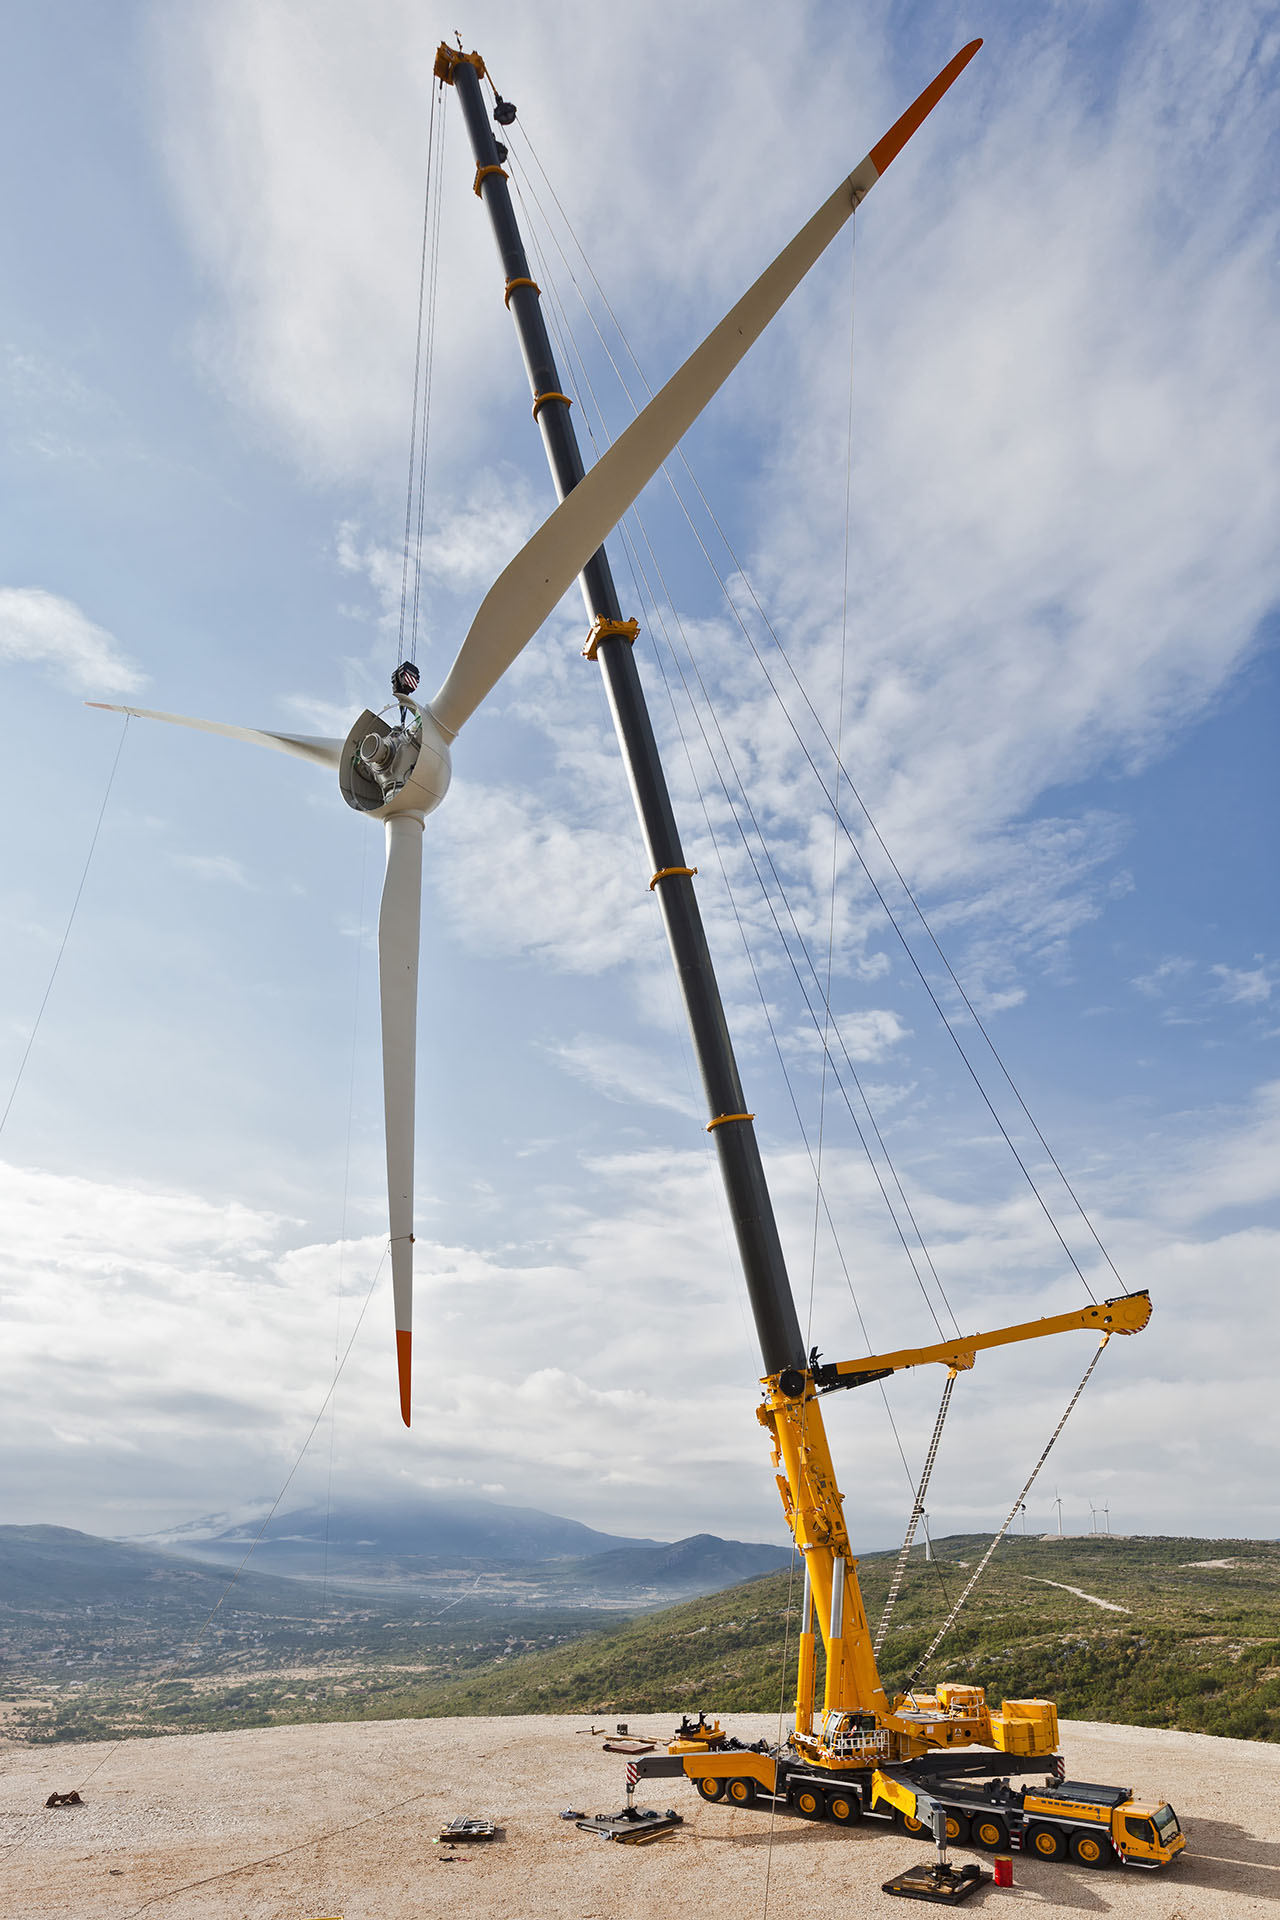 Yellow telescopic crane lifts the rotor blades of a wind turbine